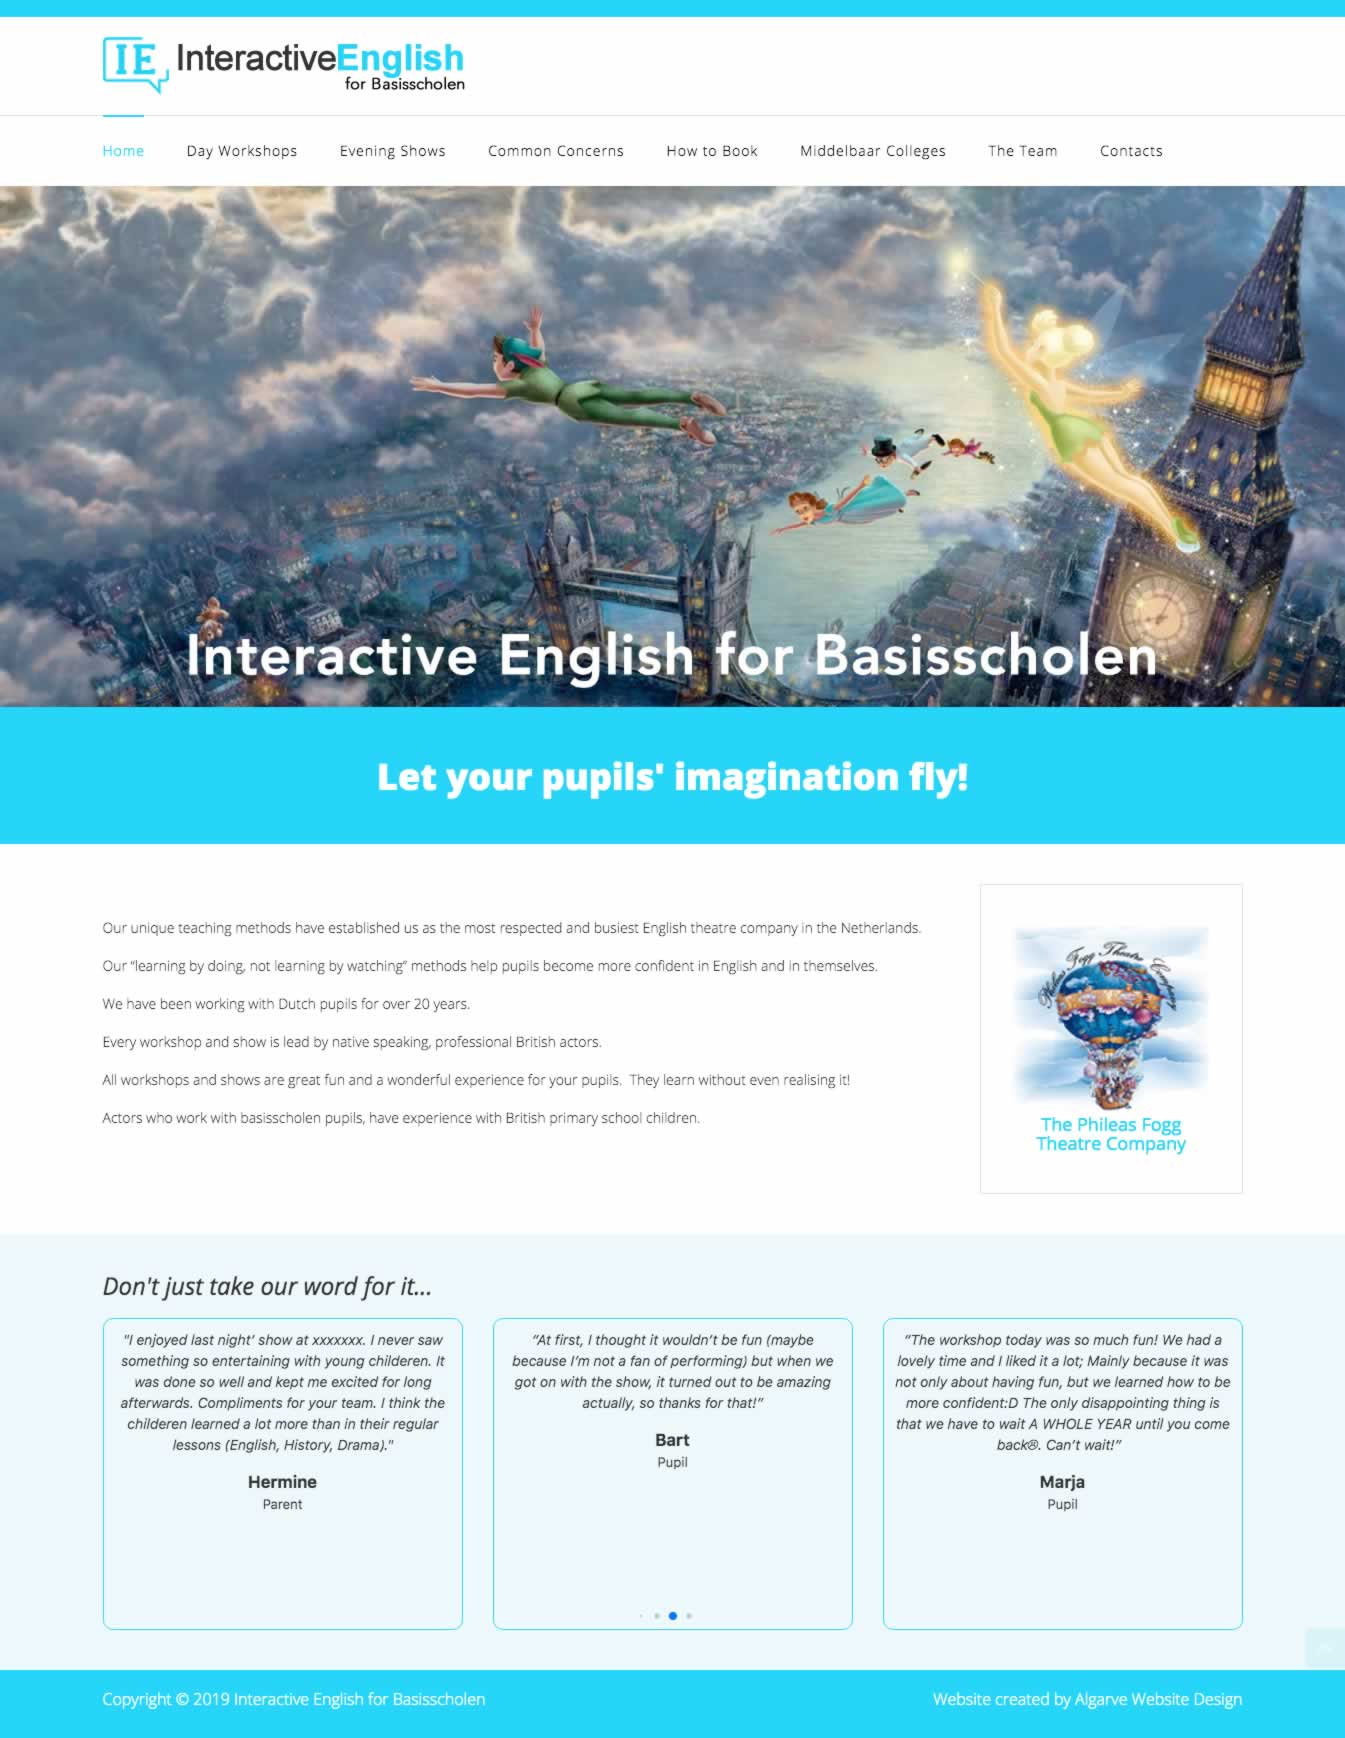 interactiveenglish.co.uk